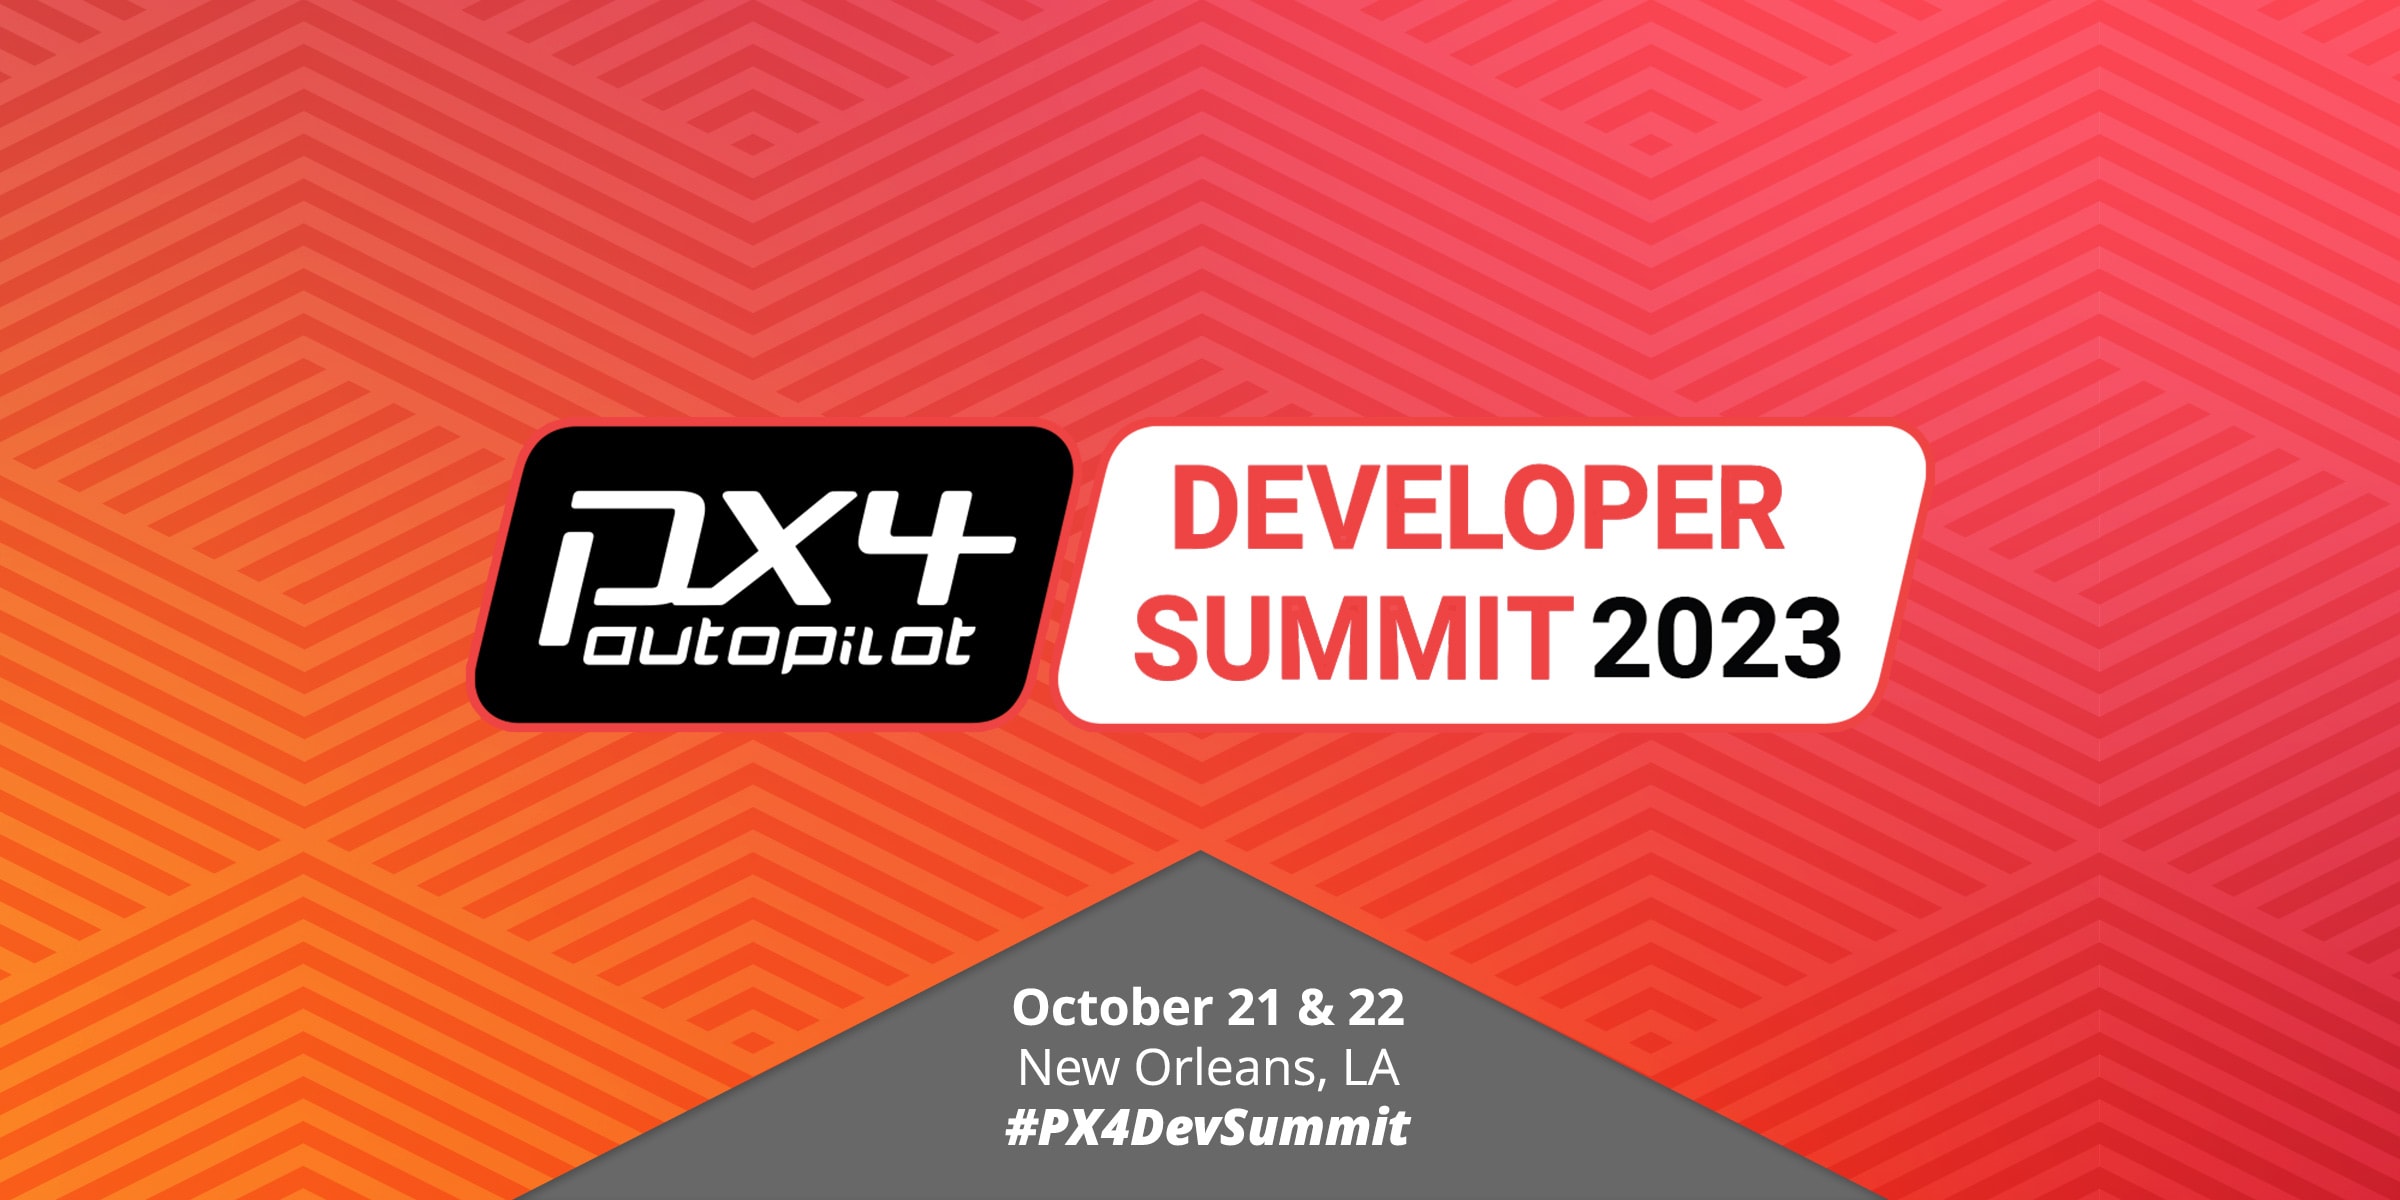 PX4 Autopilot, Developer Summit 2023. October 21 & 22. New Orleans, LA. @PX4DevSummit